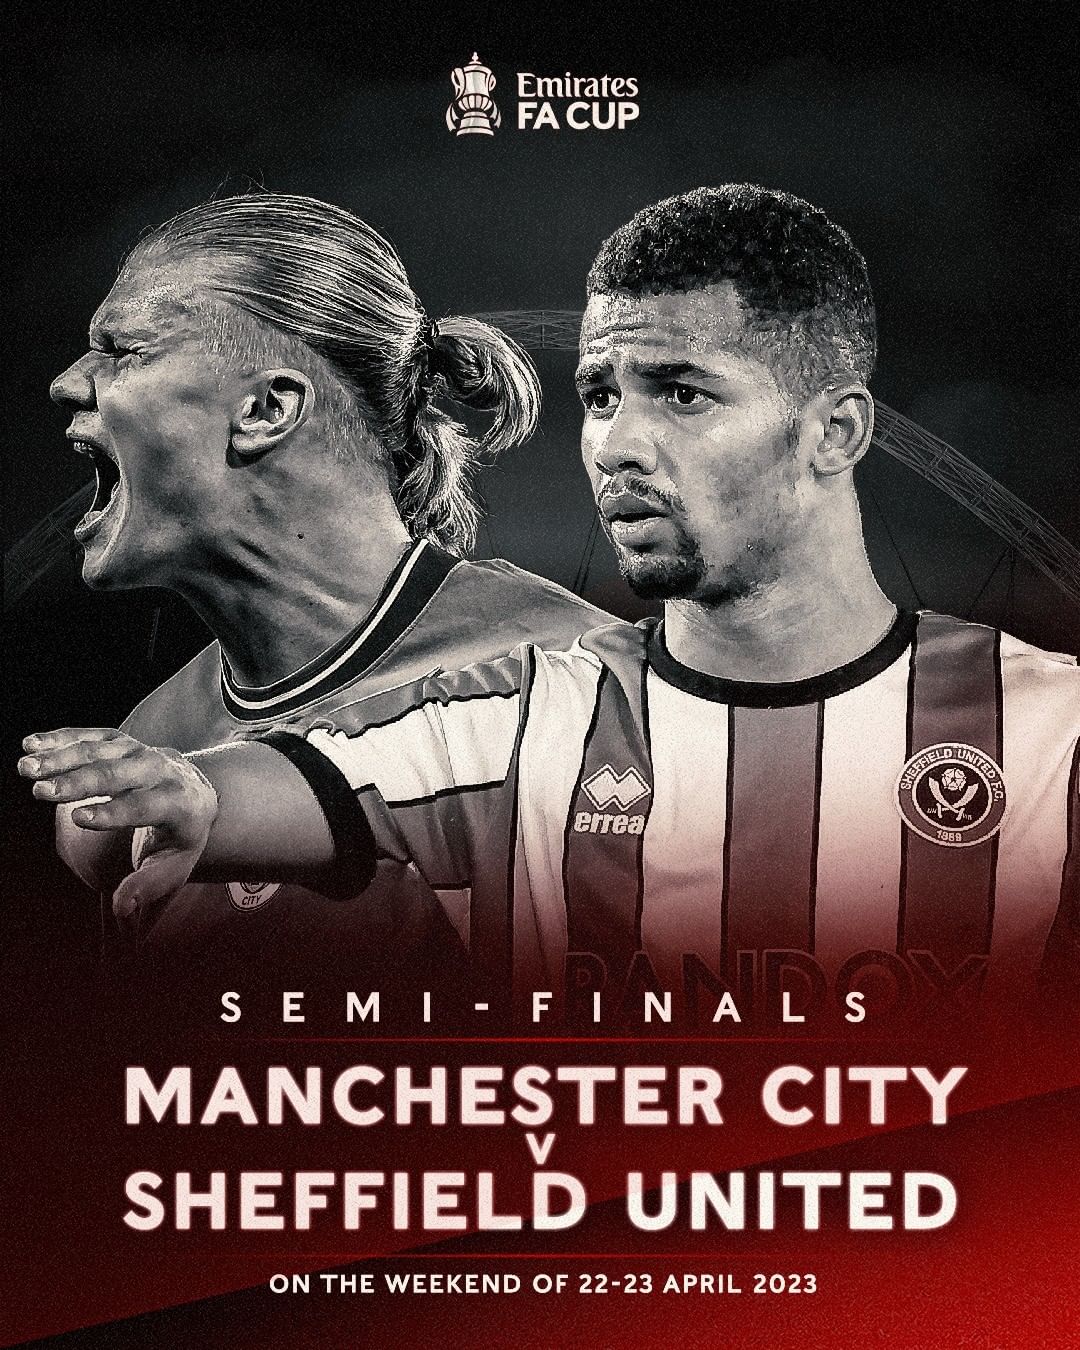 Derby Manchester di final FA Cup 2023